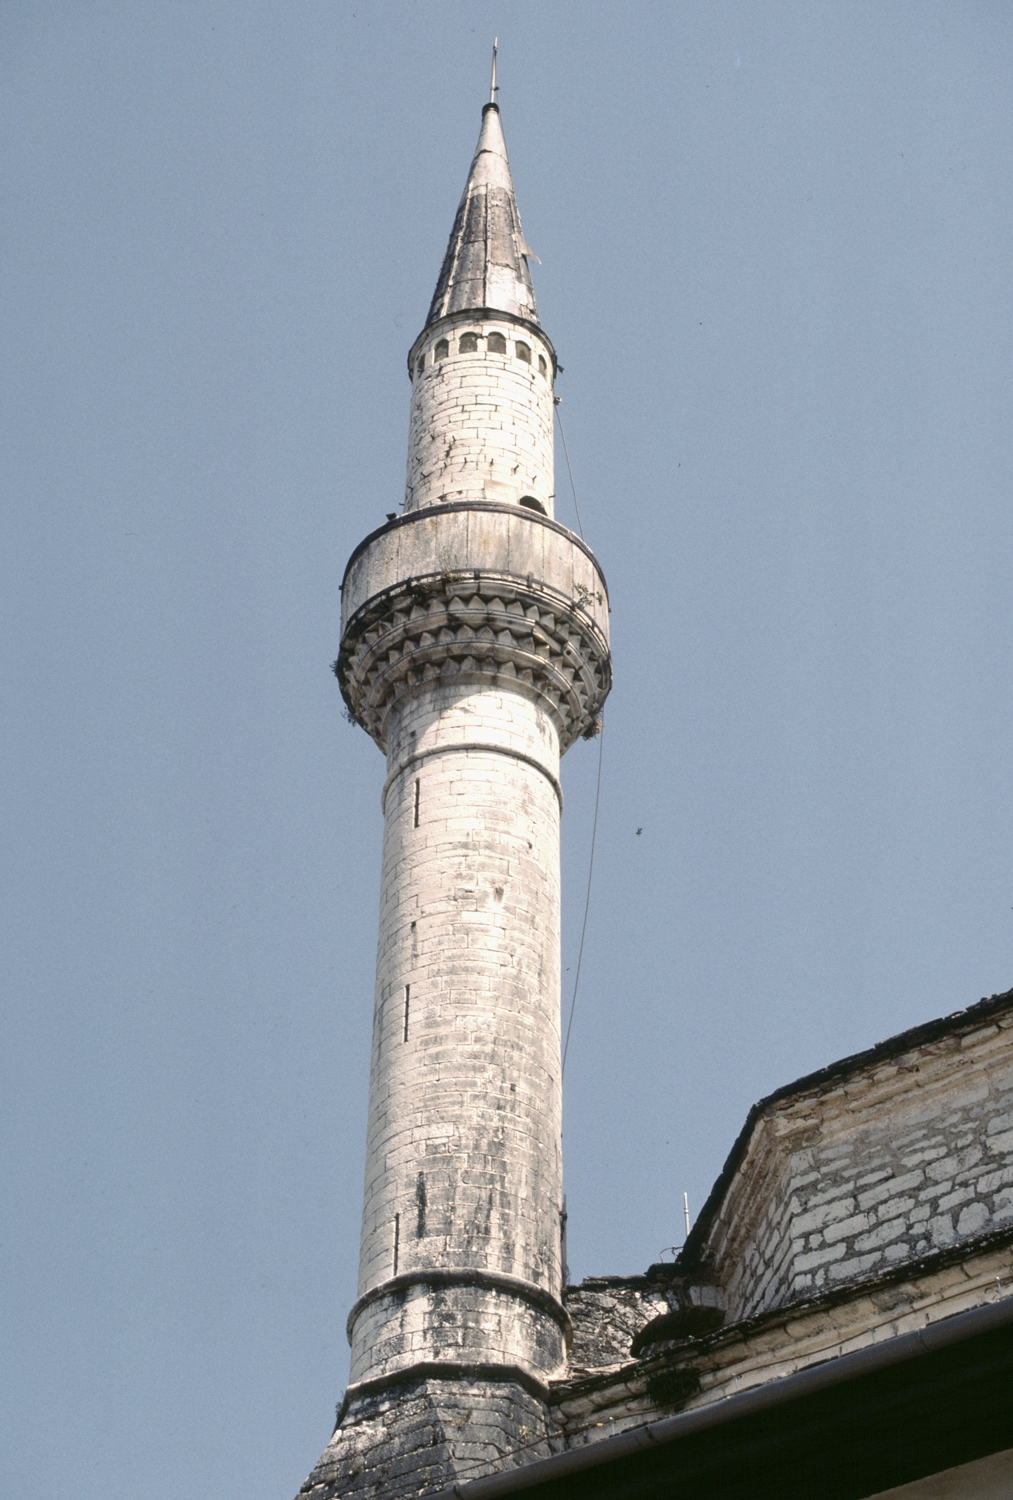 View of minaret from below